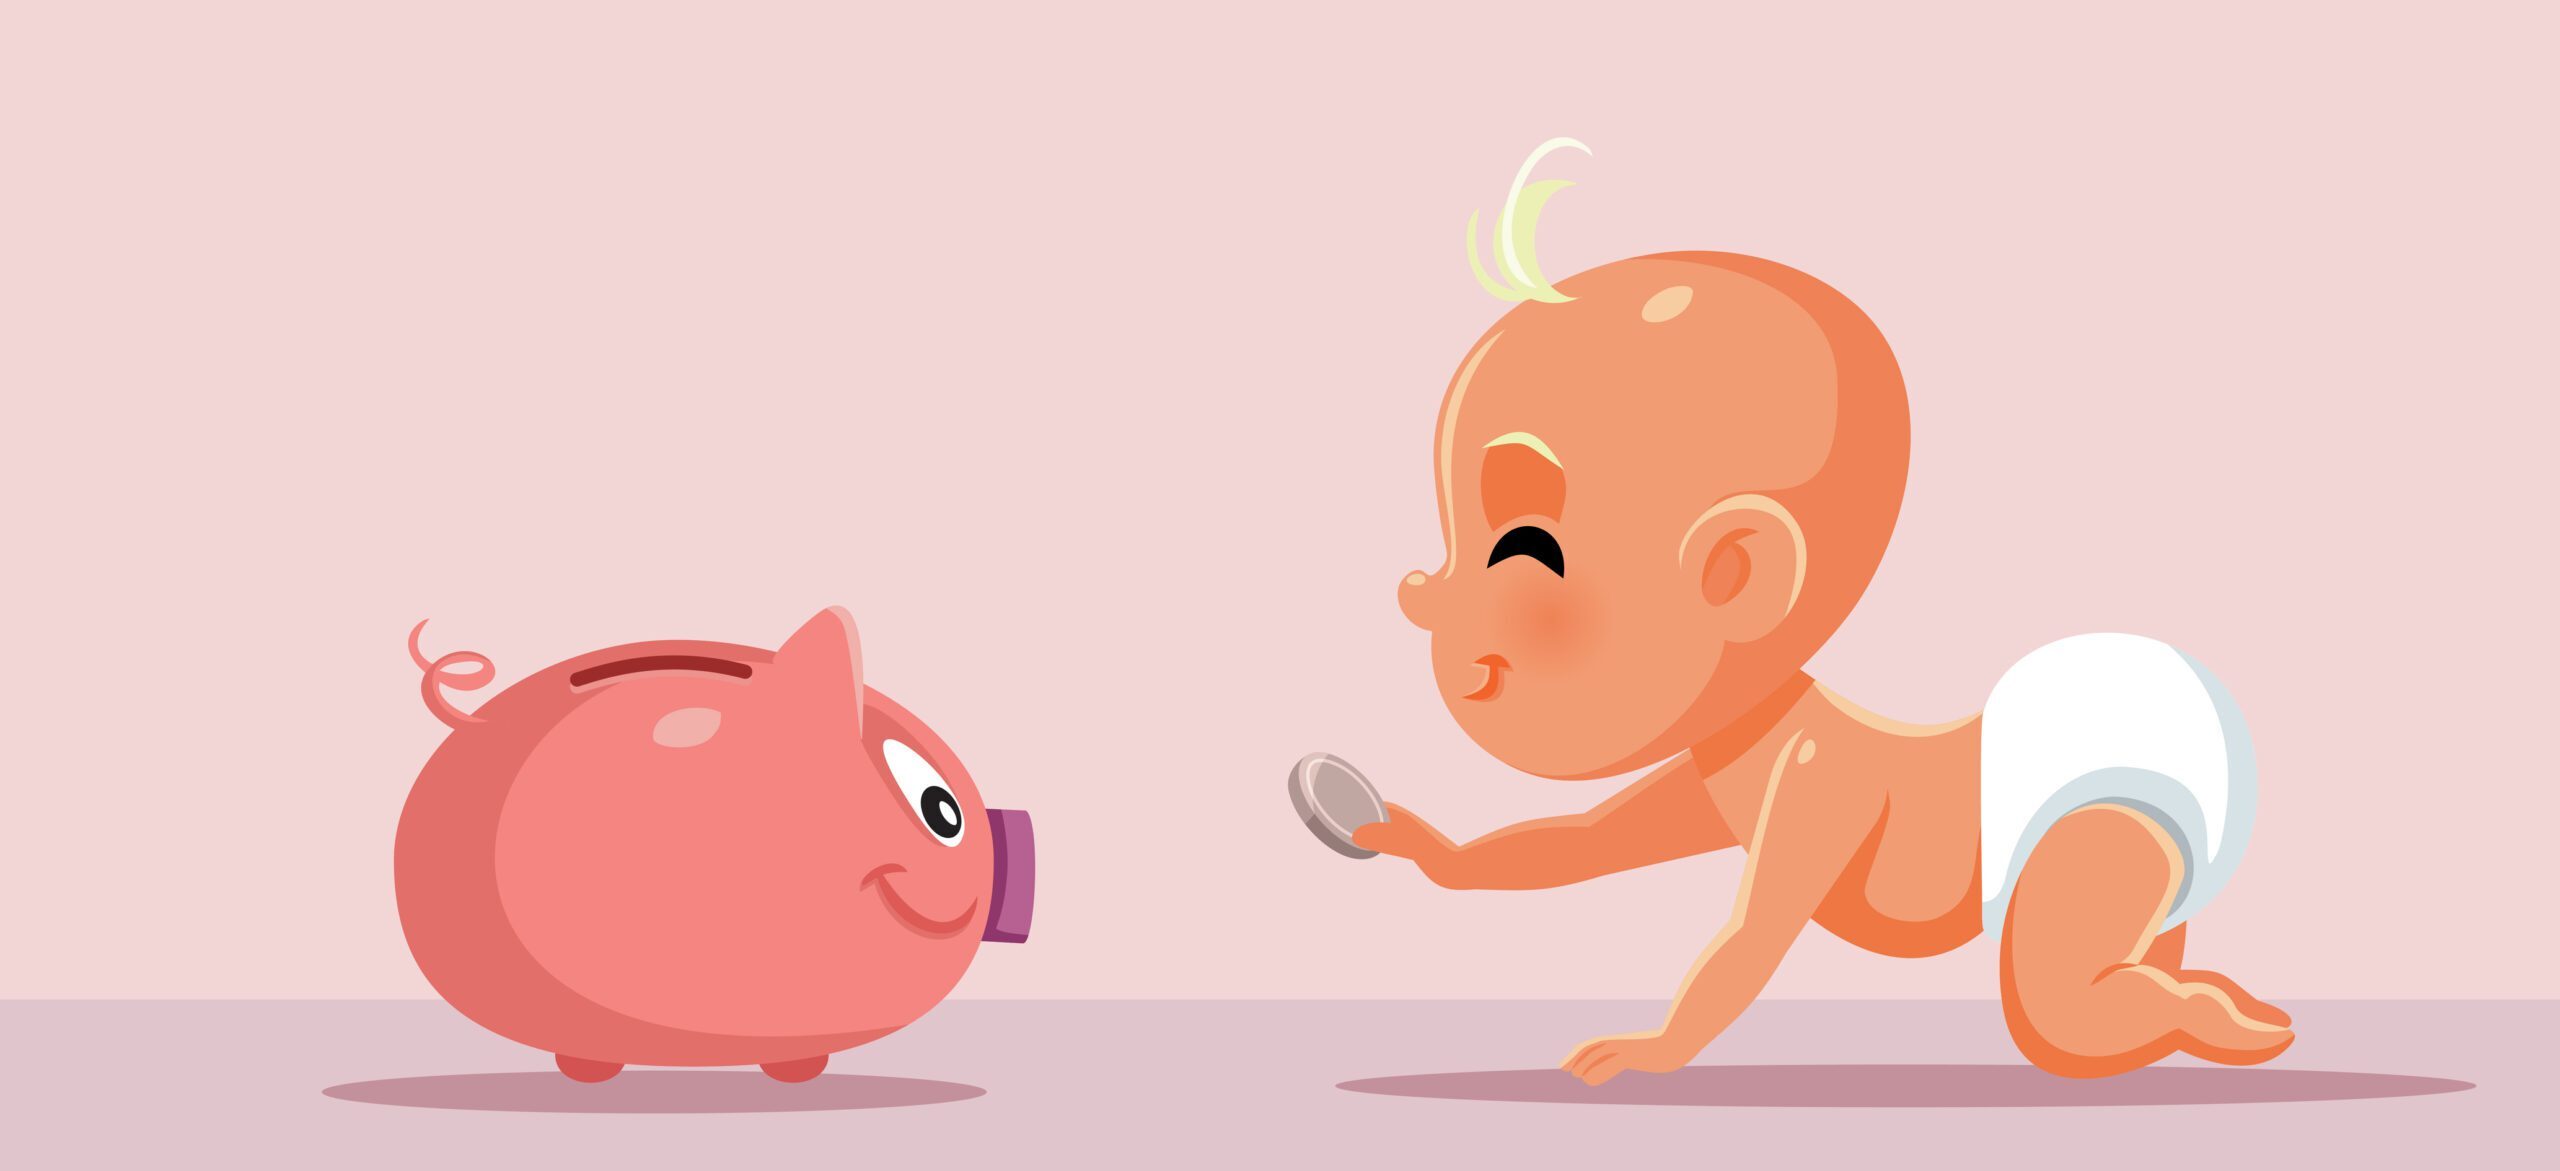 Baby with Piggy Bank Saving Money Vector Cartoon